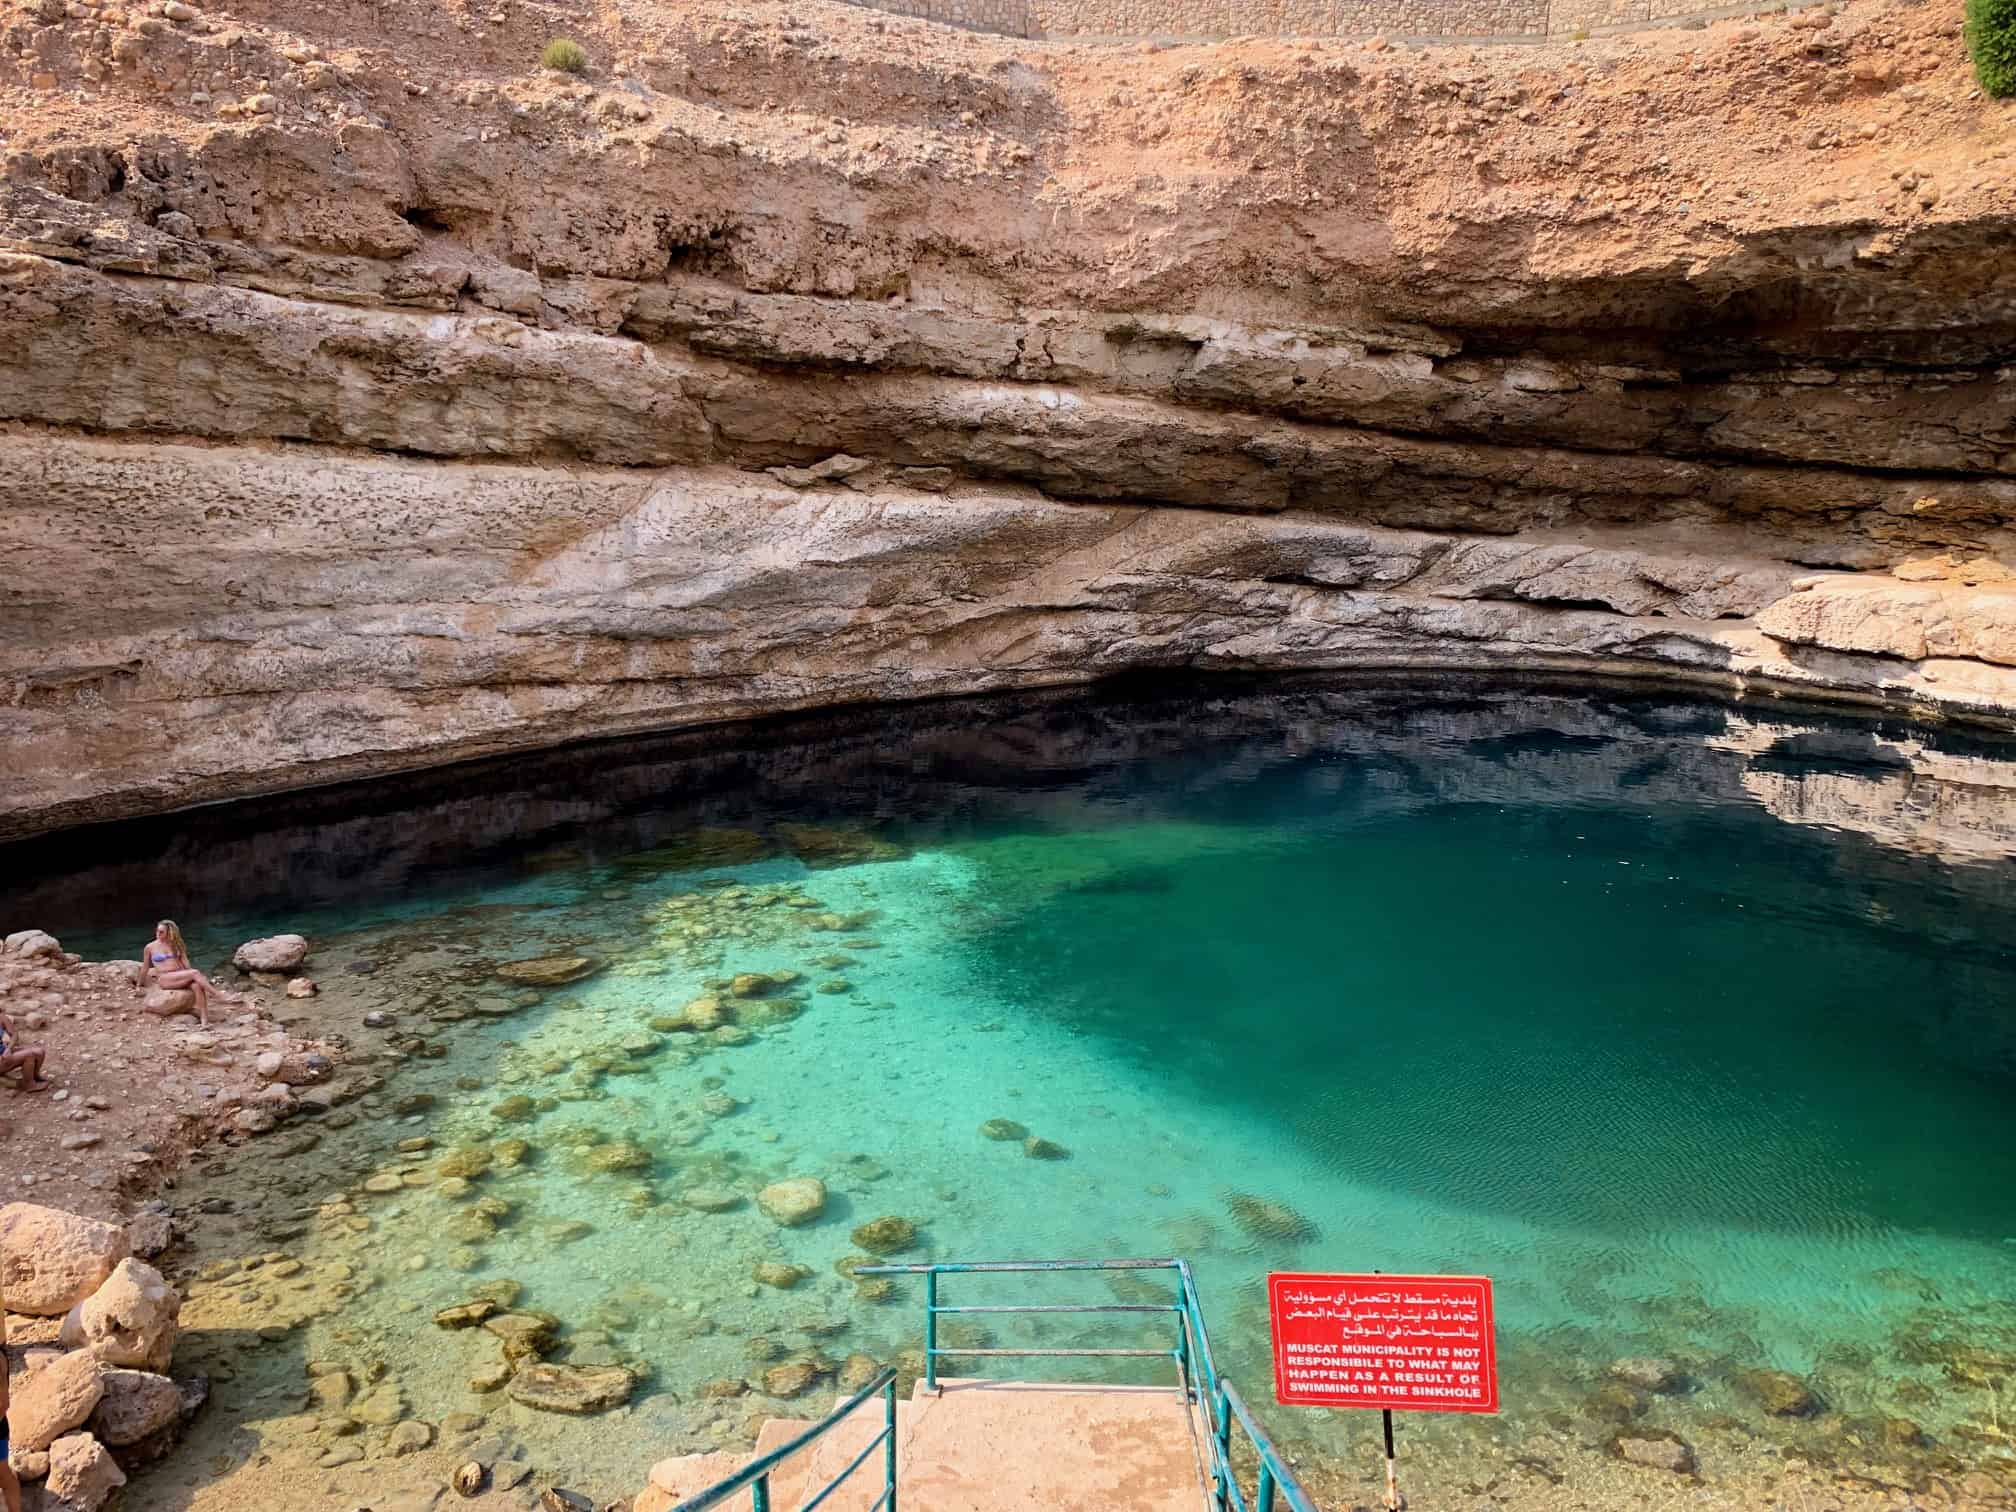 Beautiful blue water at Bimmah Sinkhole in Oman